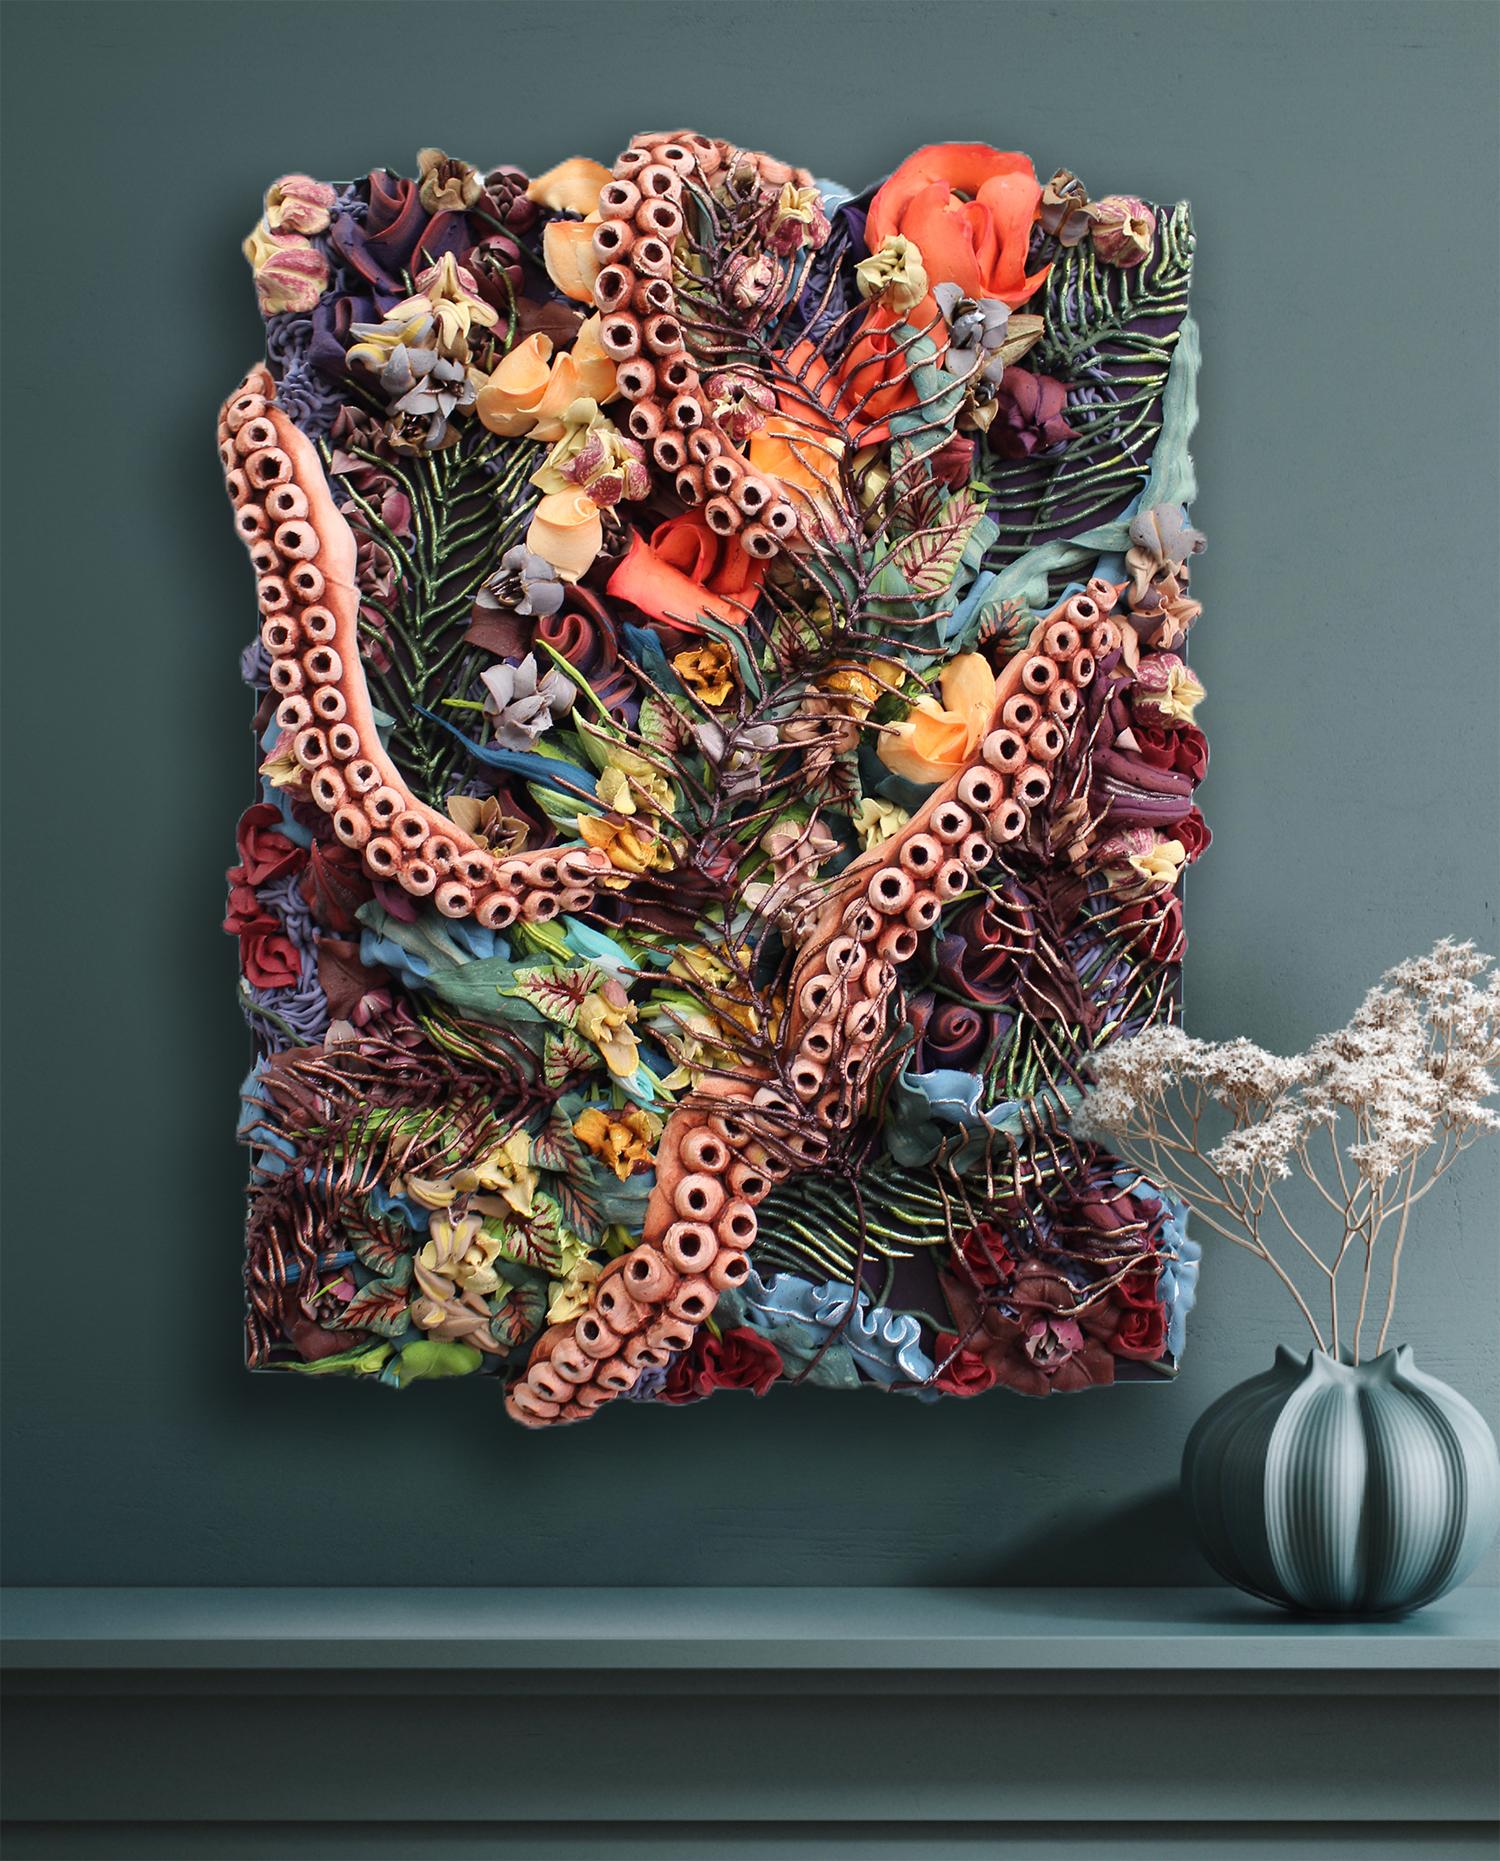 Underwater Ocean Seascape Floral with Octopus by Seren Morey - Zozimos 2